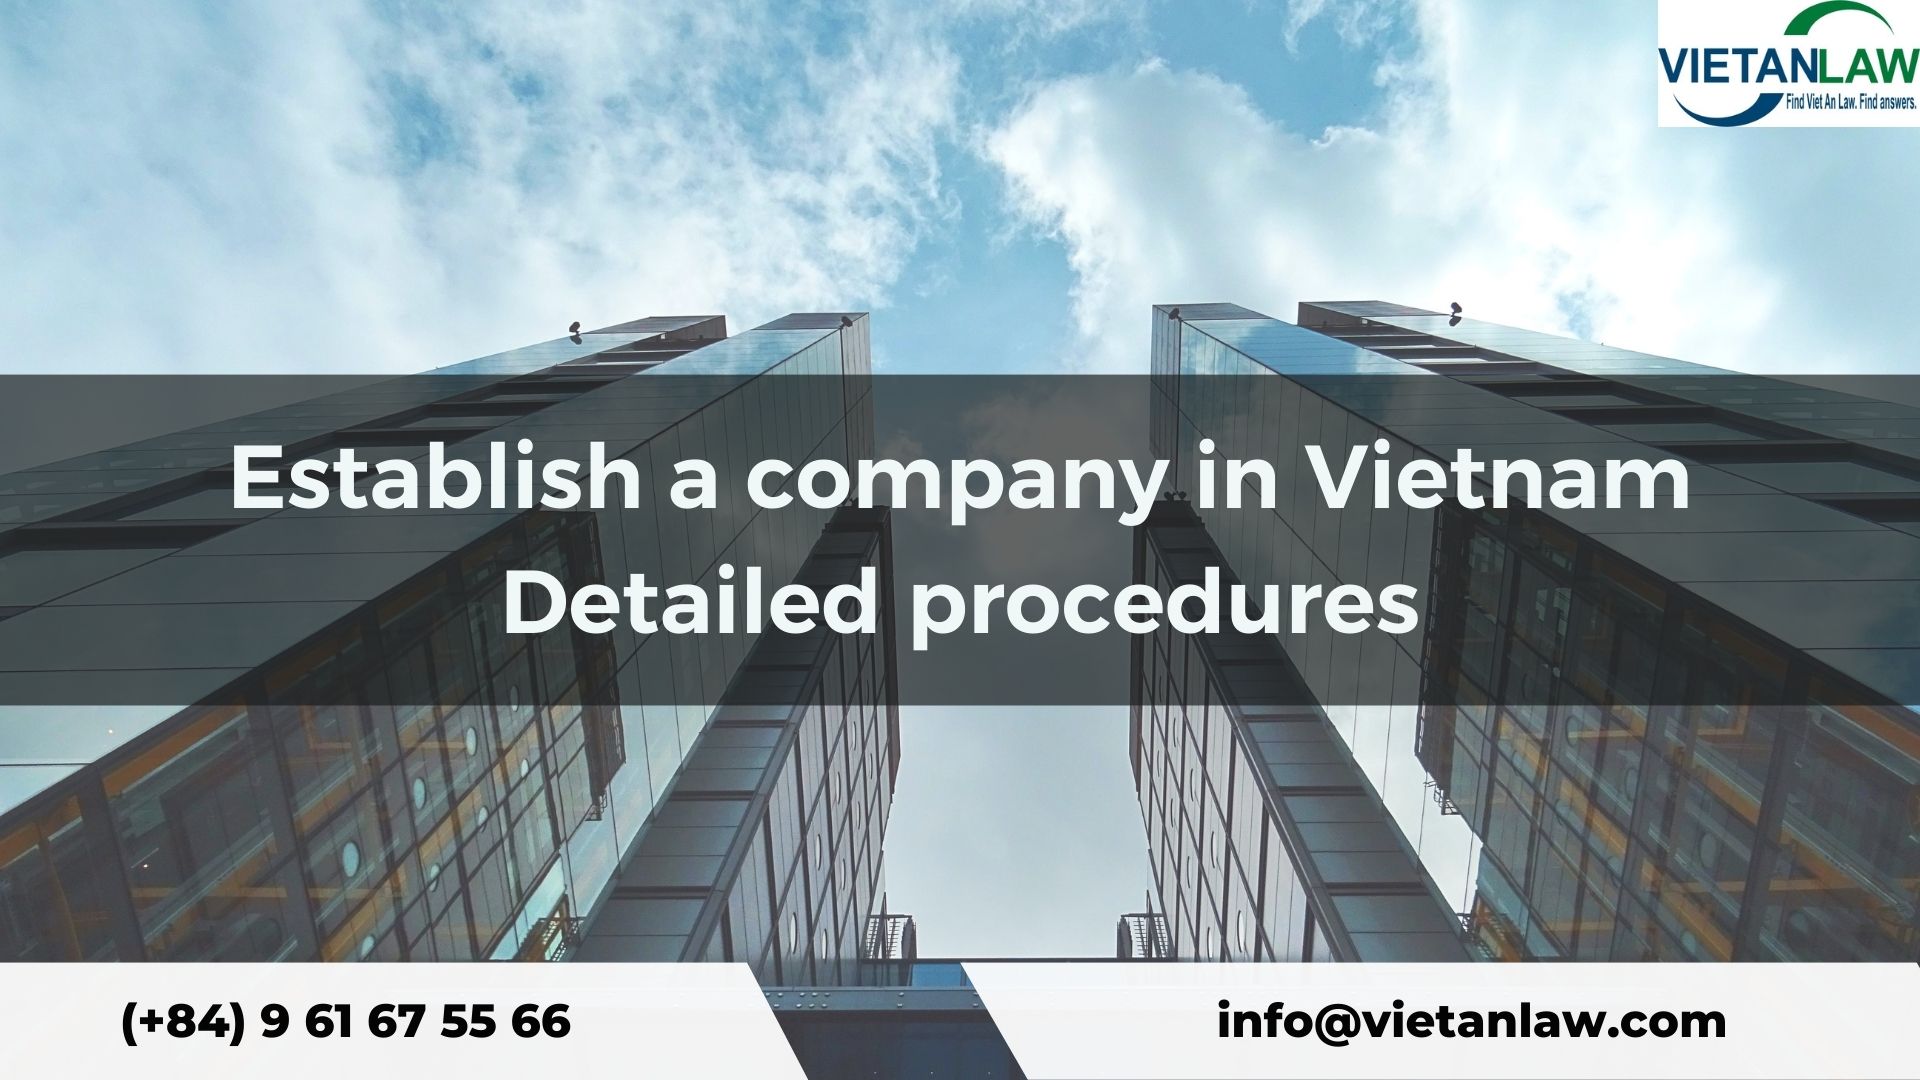 Establish a company in Vietnam - Detailed procedures